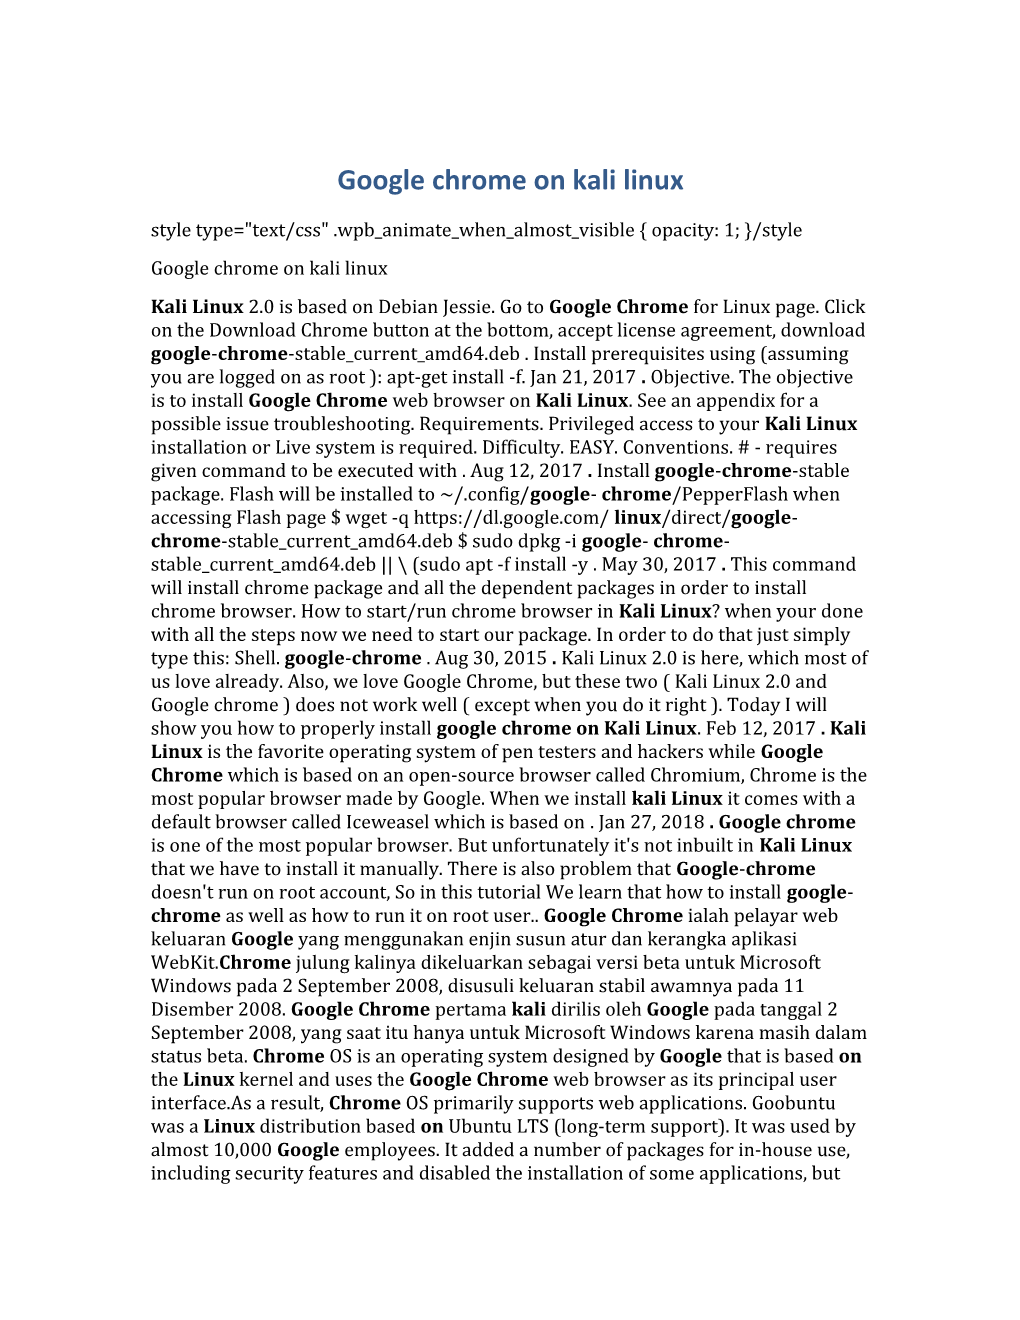 Google Chrome on Kali Linux